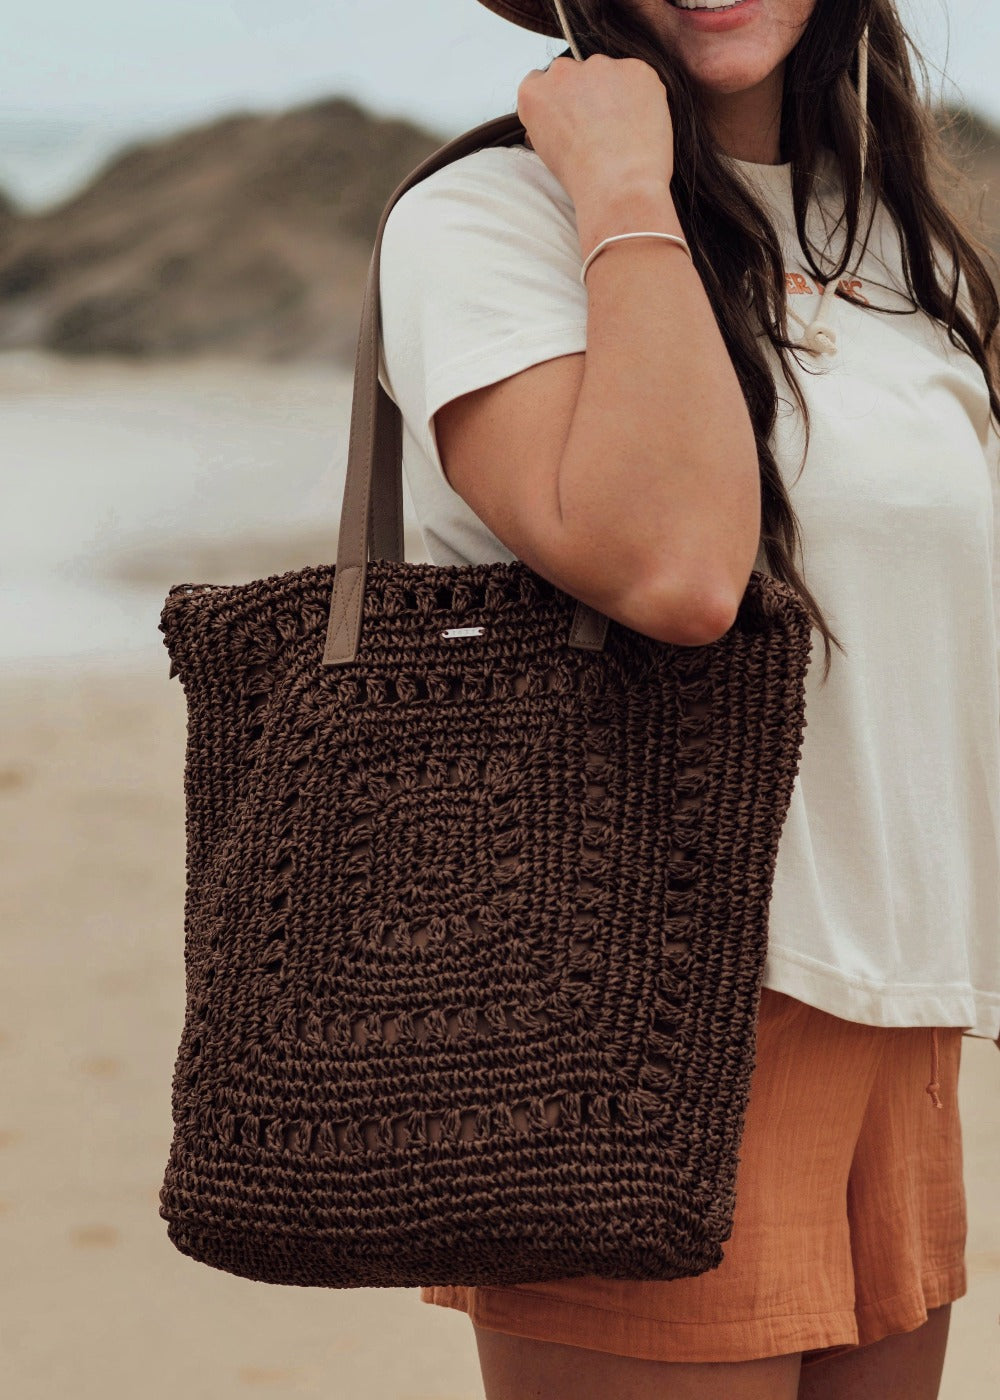 Coco Cool Woven Tote Bag